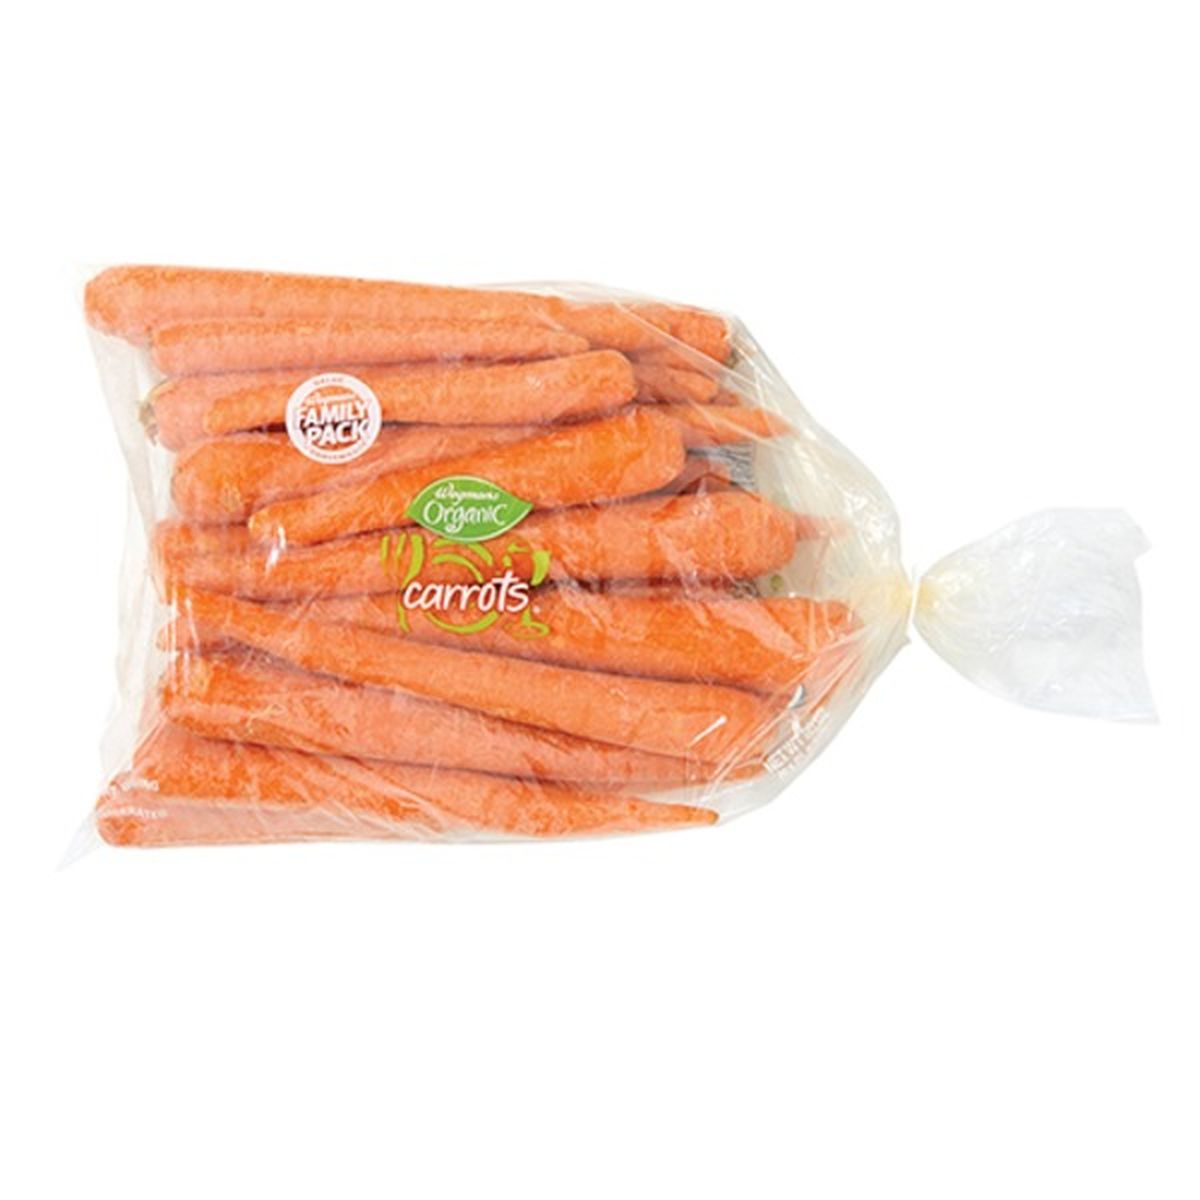 Calories in Wegmans Organic Carrots, FAMILY PACK